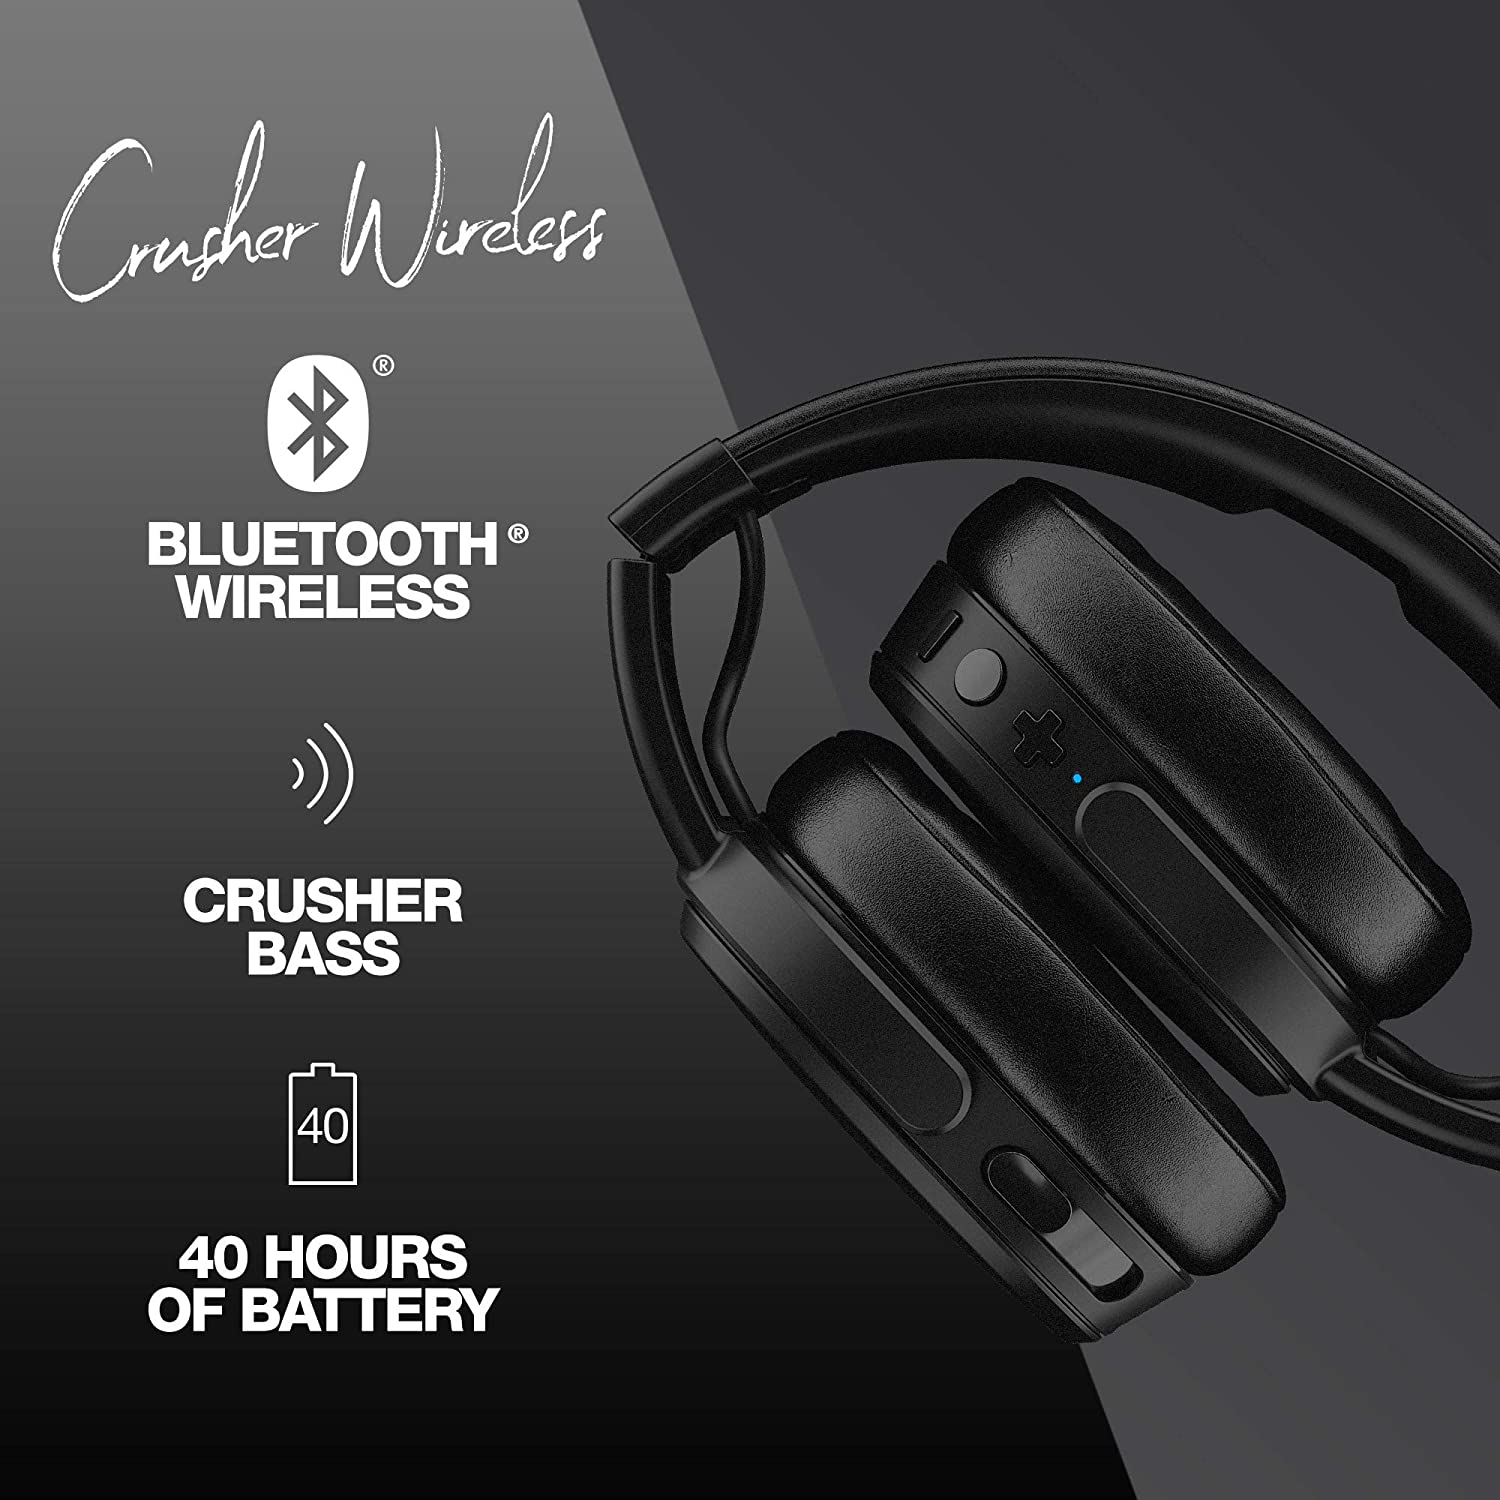 Skullcandy Crusher Over-Ear Bluetooth Headphones (Black)